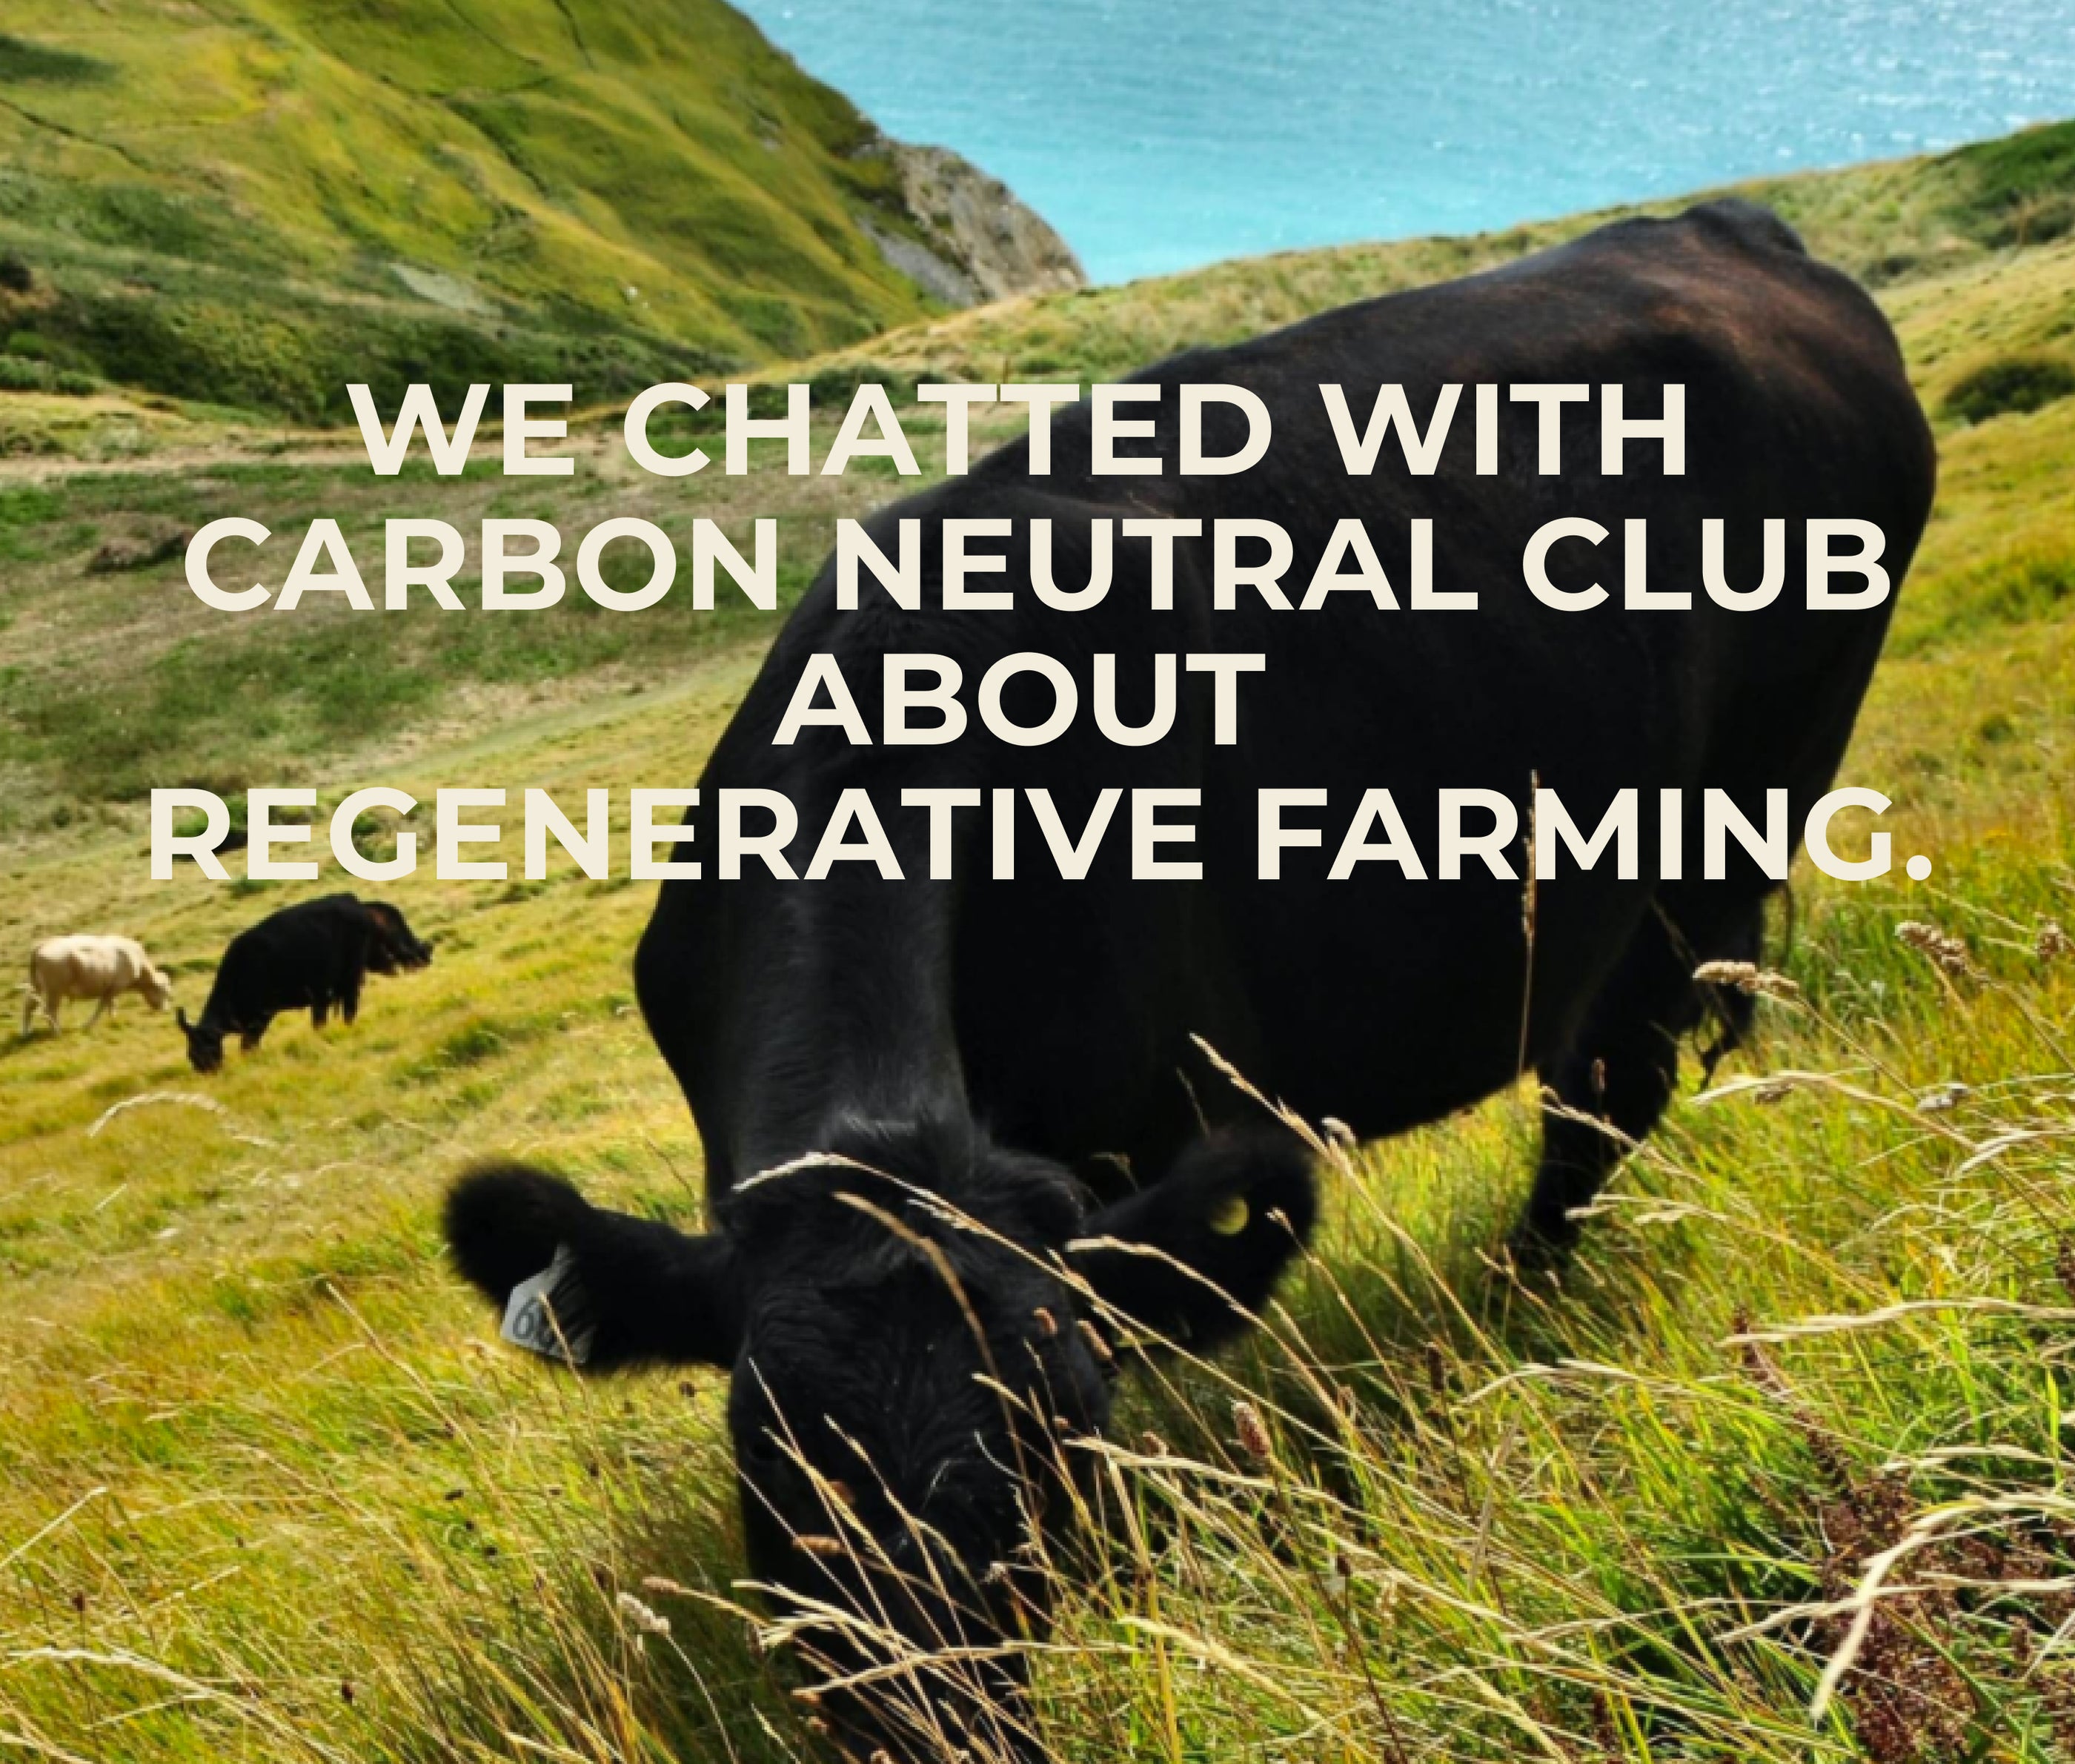 Regenerative Farming and Carbon Neutrality